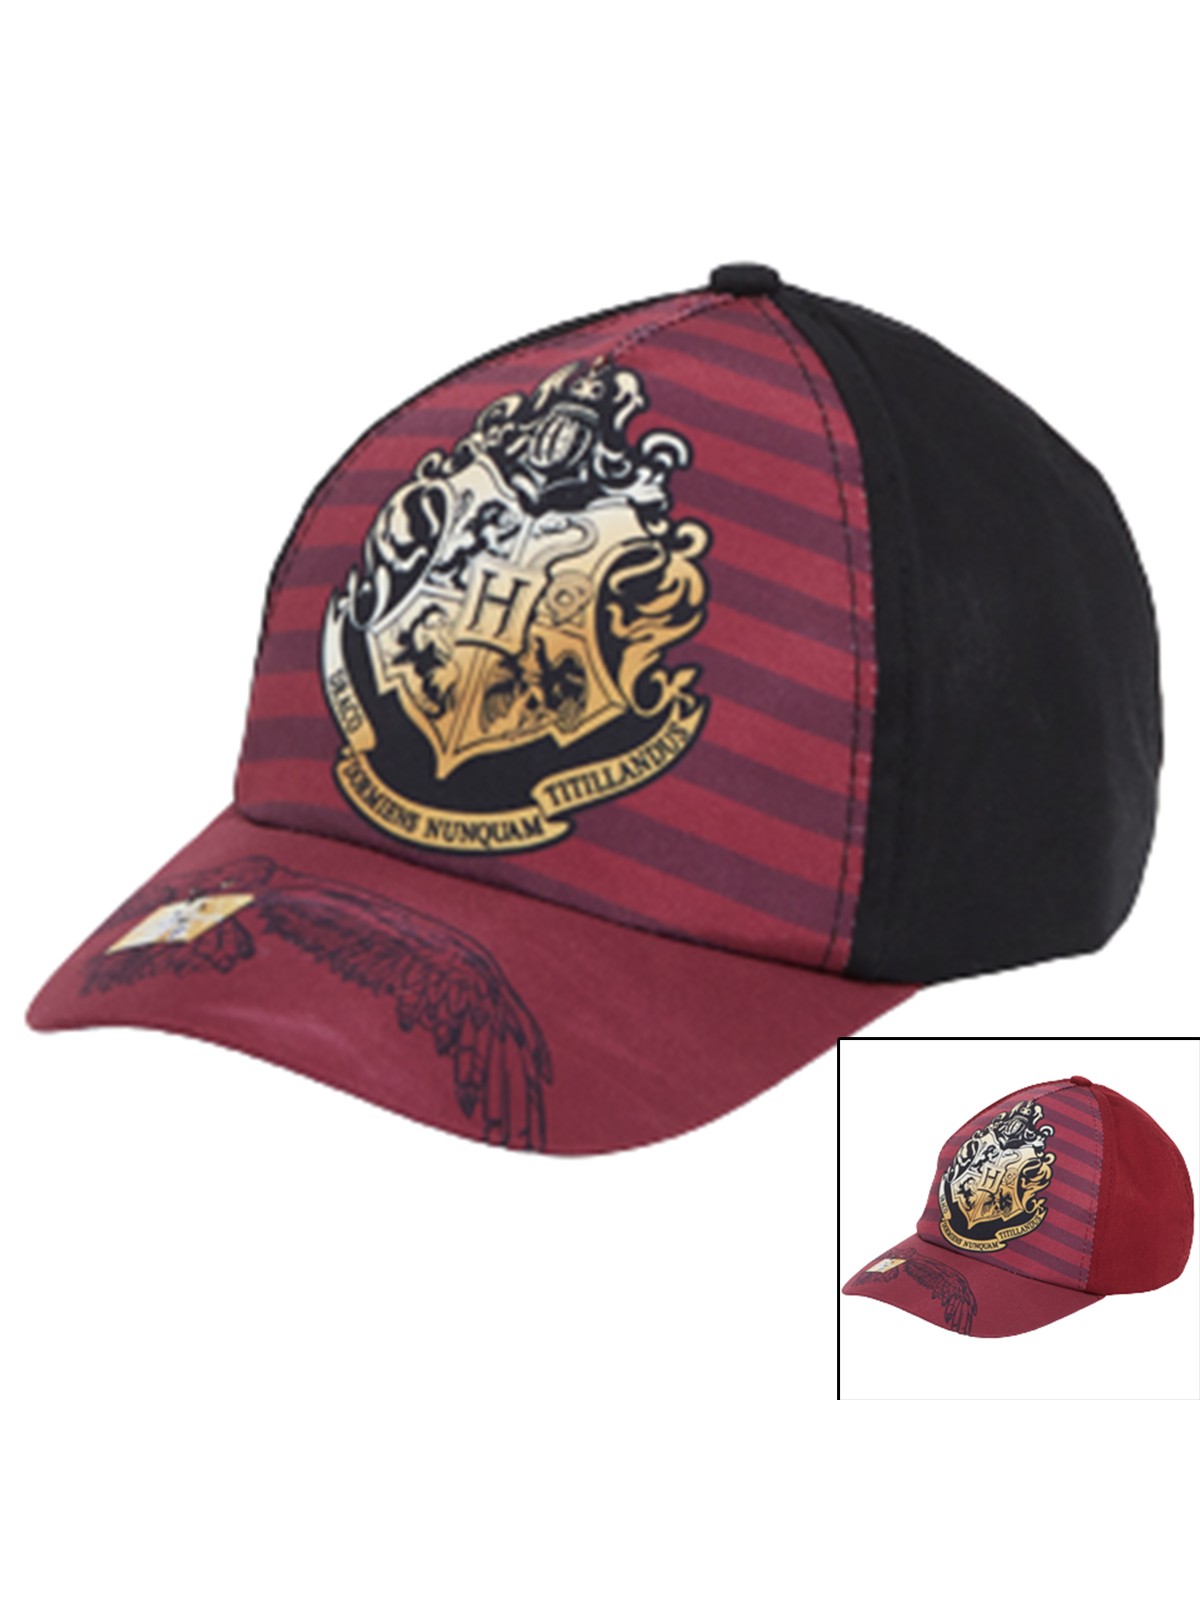 Harry Potter Cap with visor